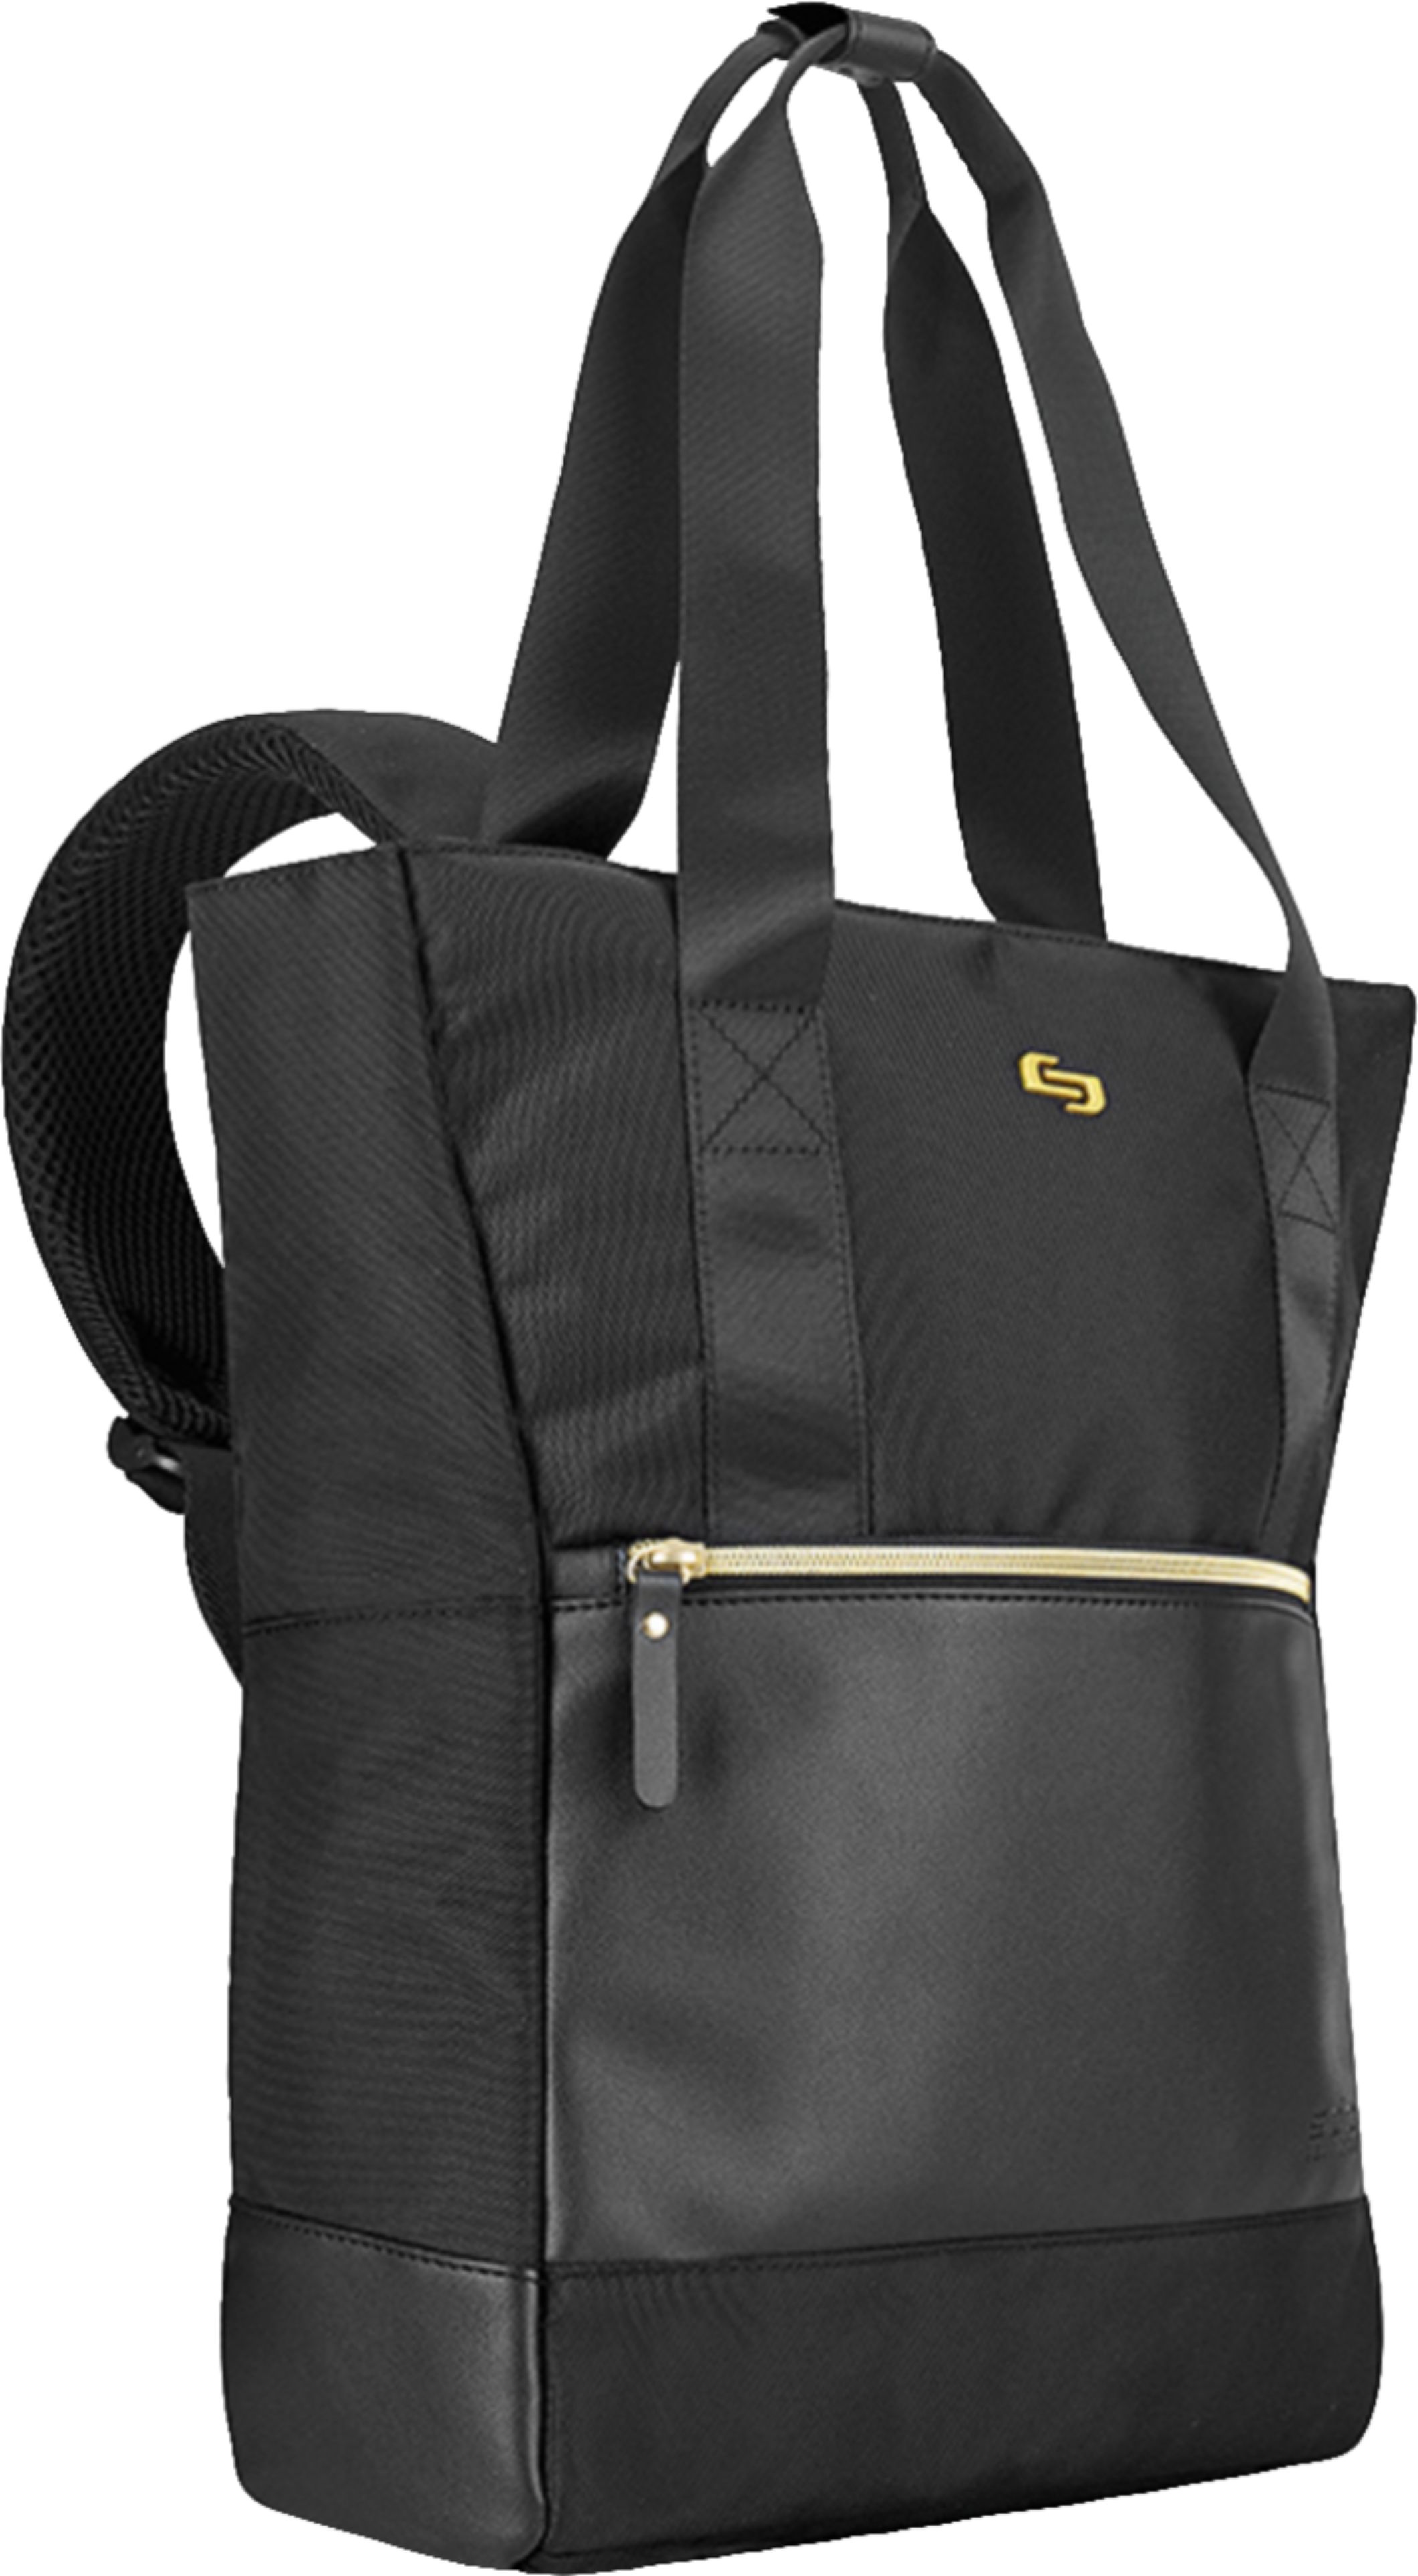 Angle View: Samsonite - Carrier Fullpack Backpack for 15.6" Laptop - Black